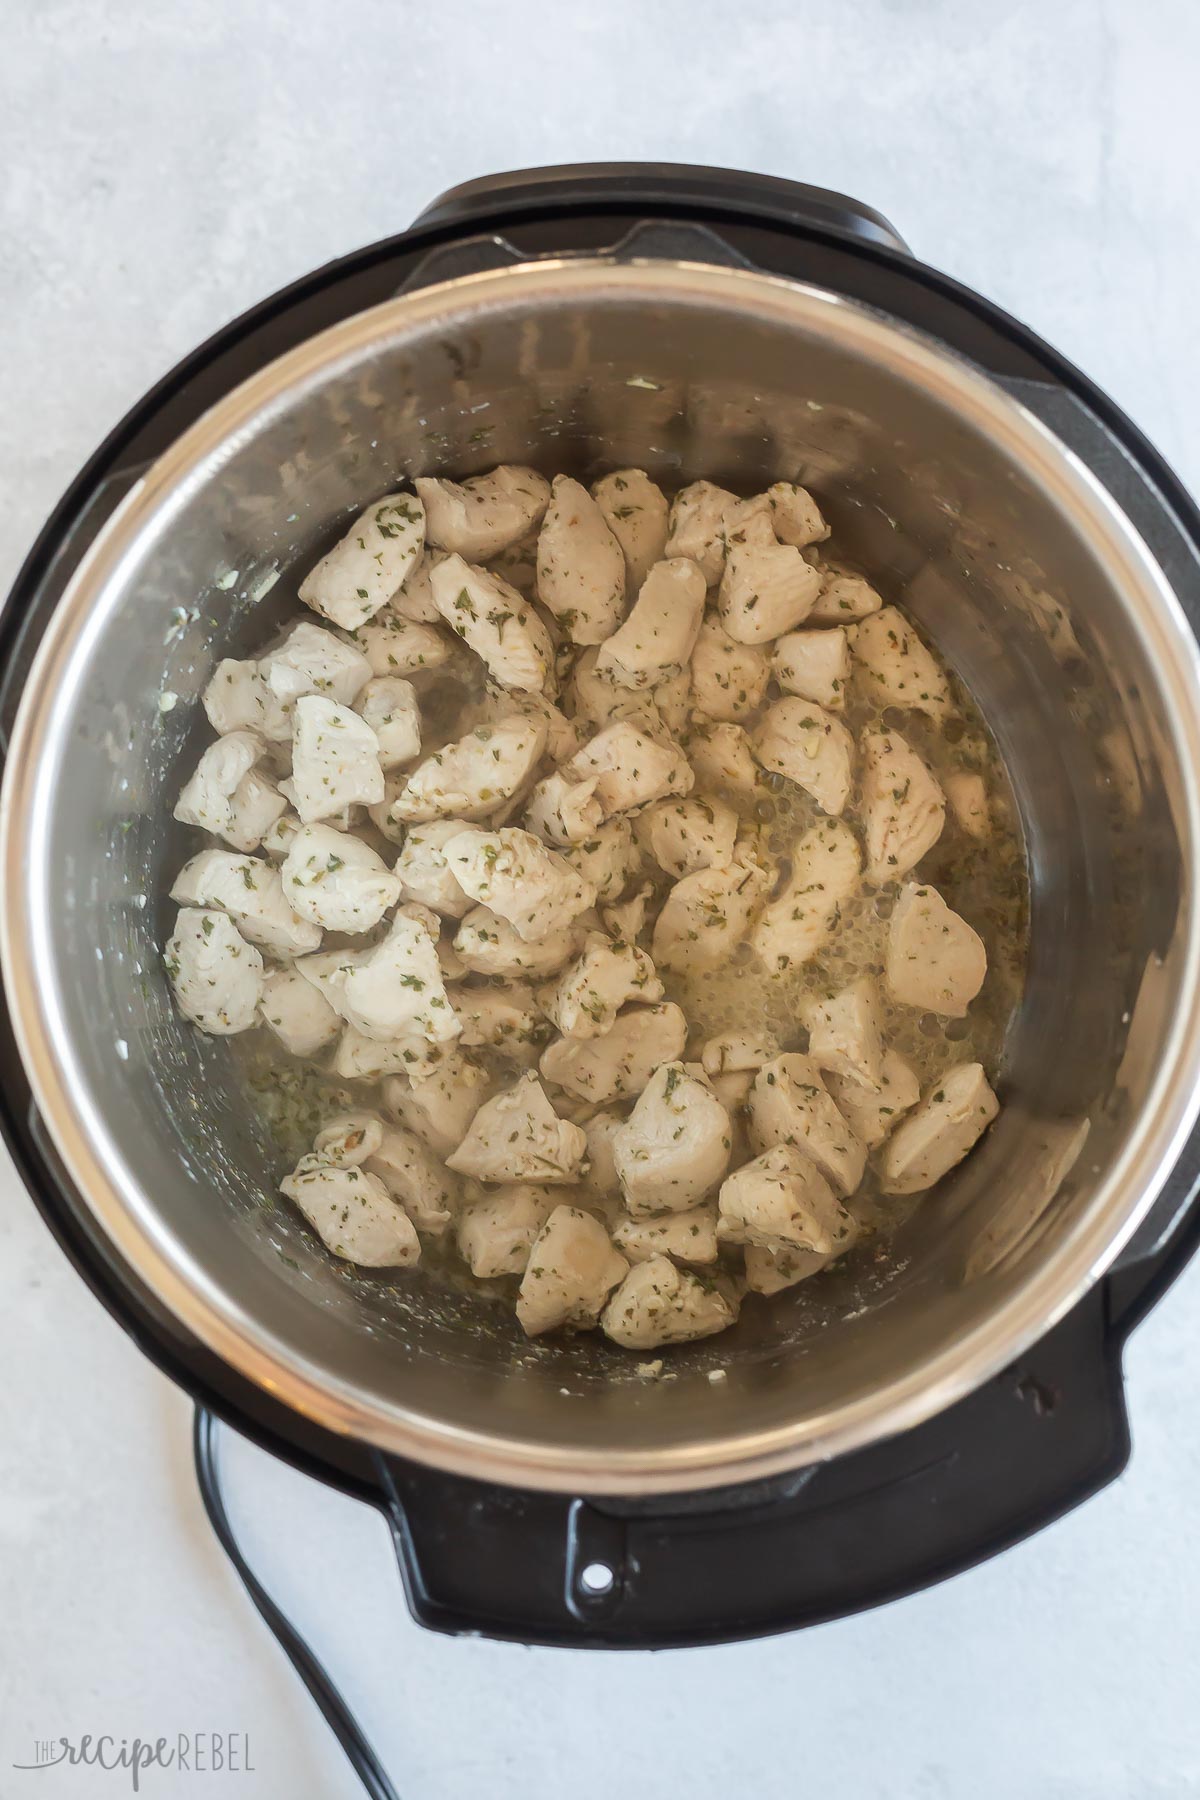 seasoned chicken breast pieces cooking in instant pot.